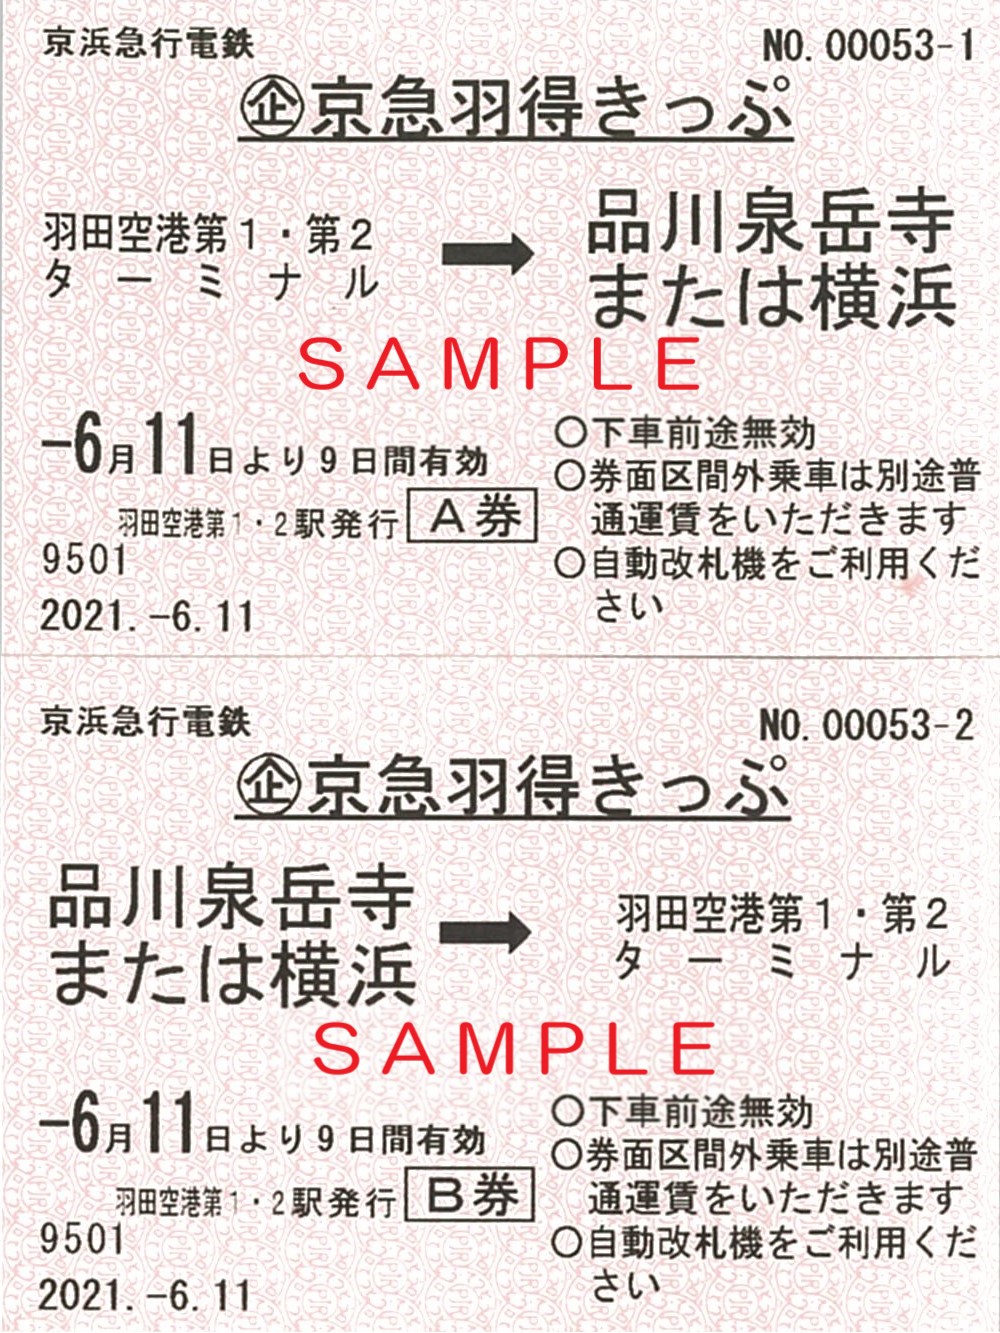 Skytree Enjoy Pack Keikyu Hatoku Ticket & Tokyo Subway 48-hour Ticket Set Plan